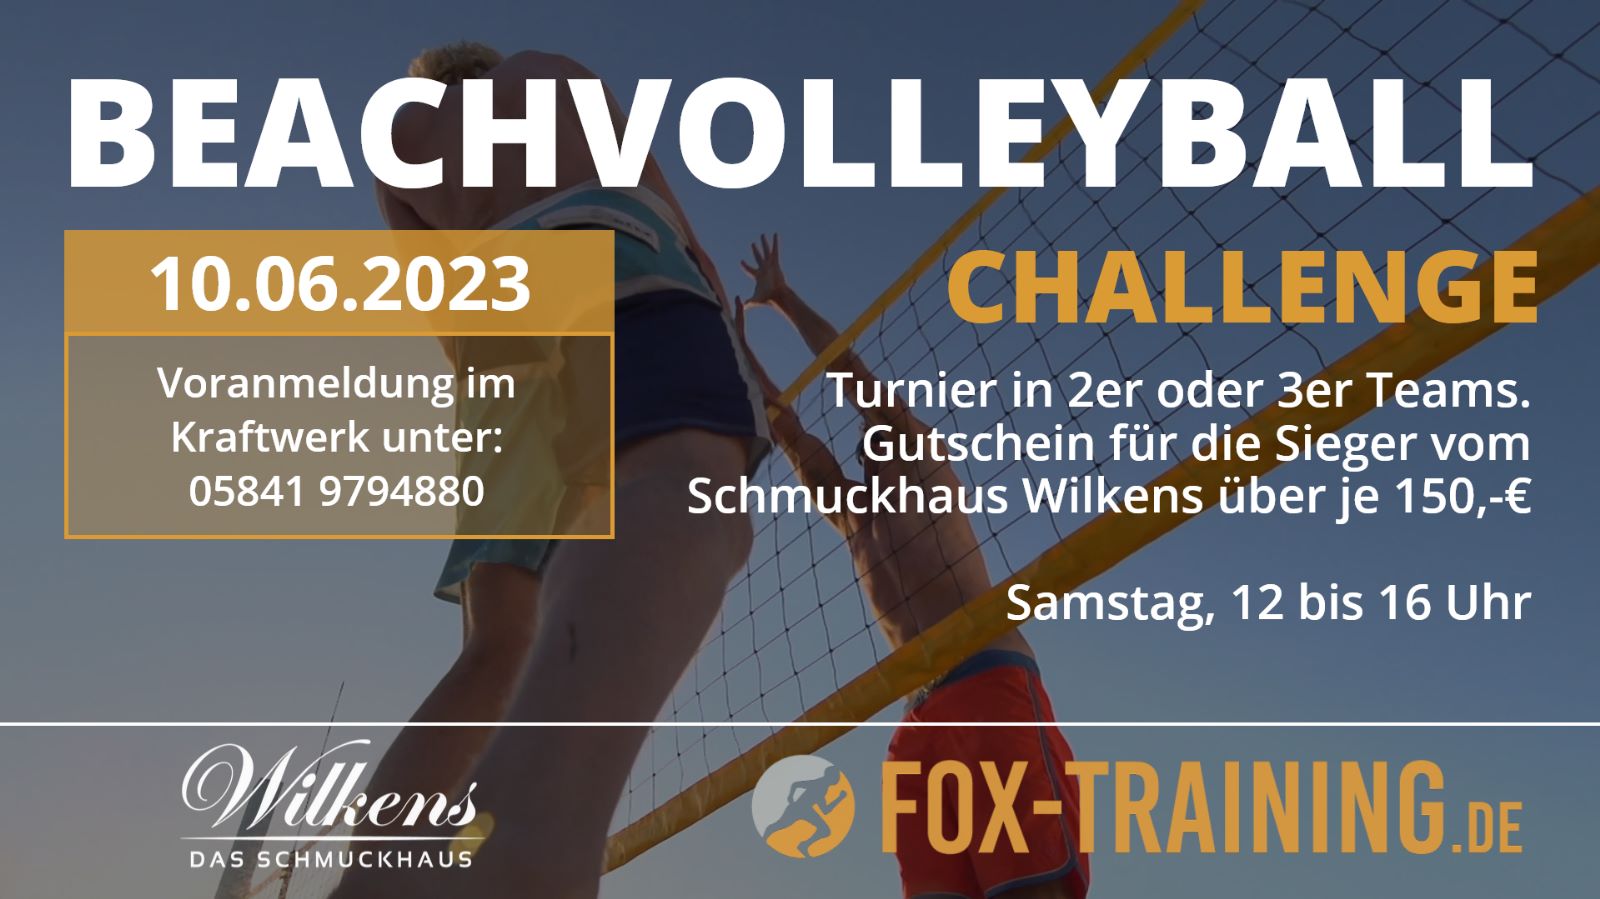 Beachvolleyball-Challenge-2023-Wilkens-Fox-Training